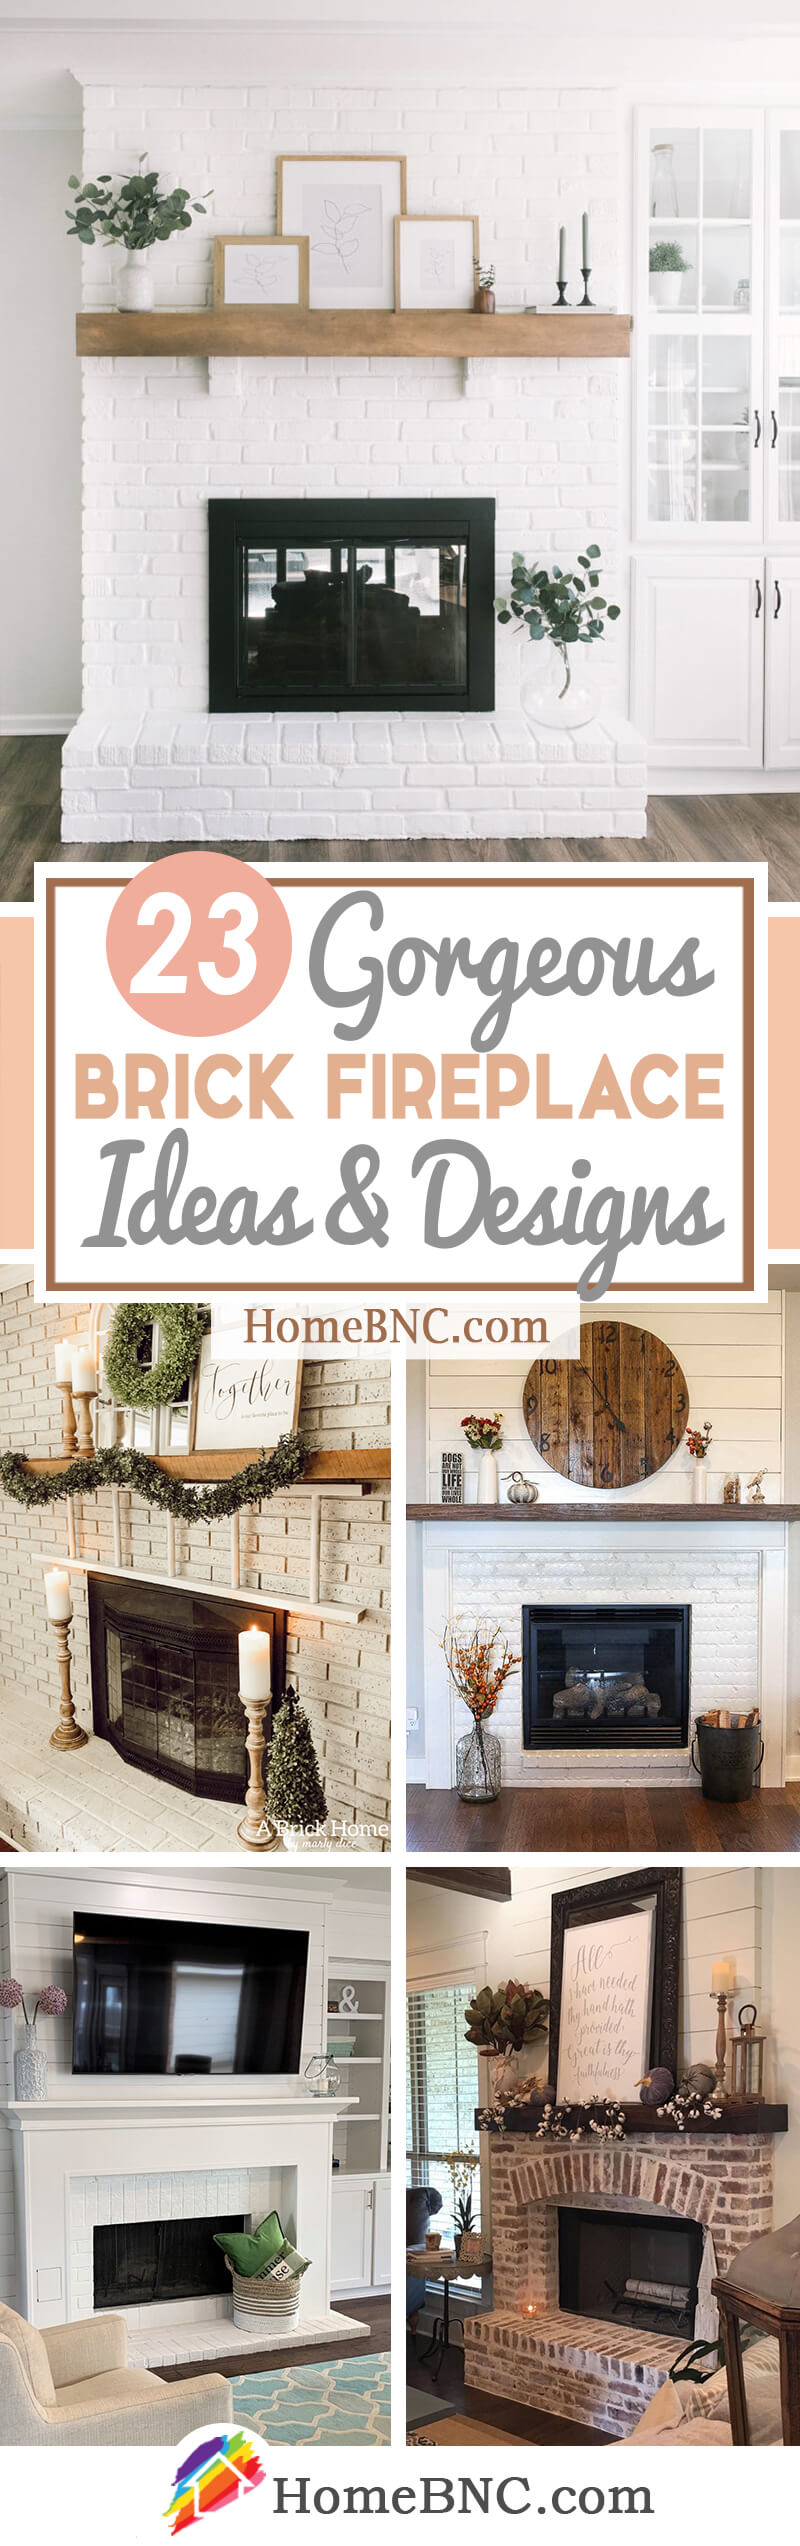 23 Best Brick Fireplace Ideas To Make, Decor For Brick Fireplace Wall